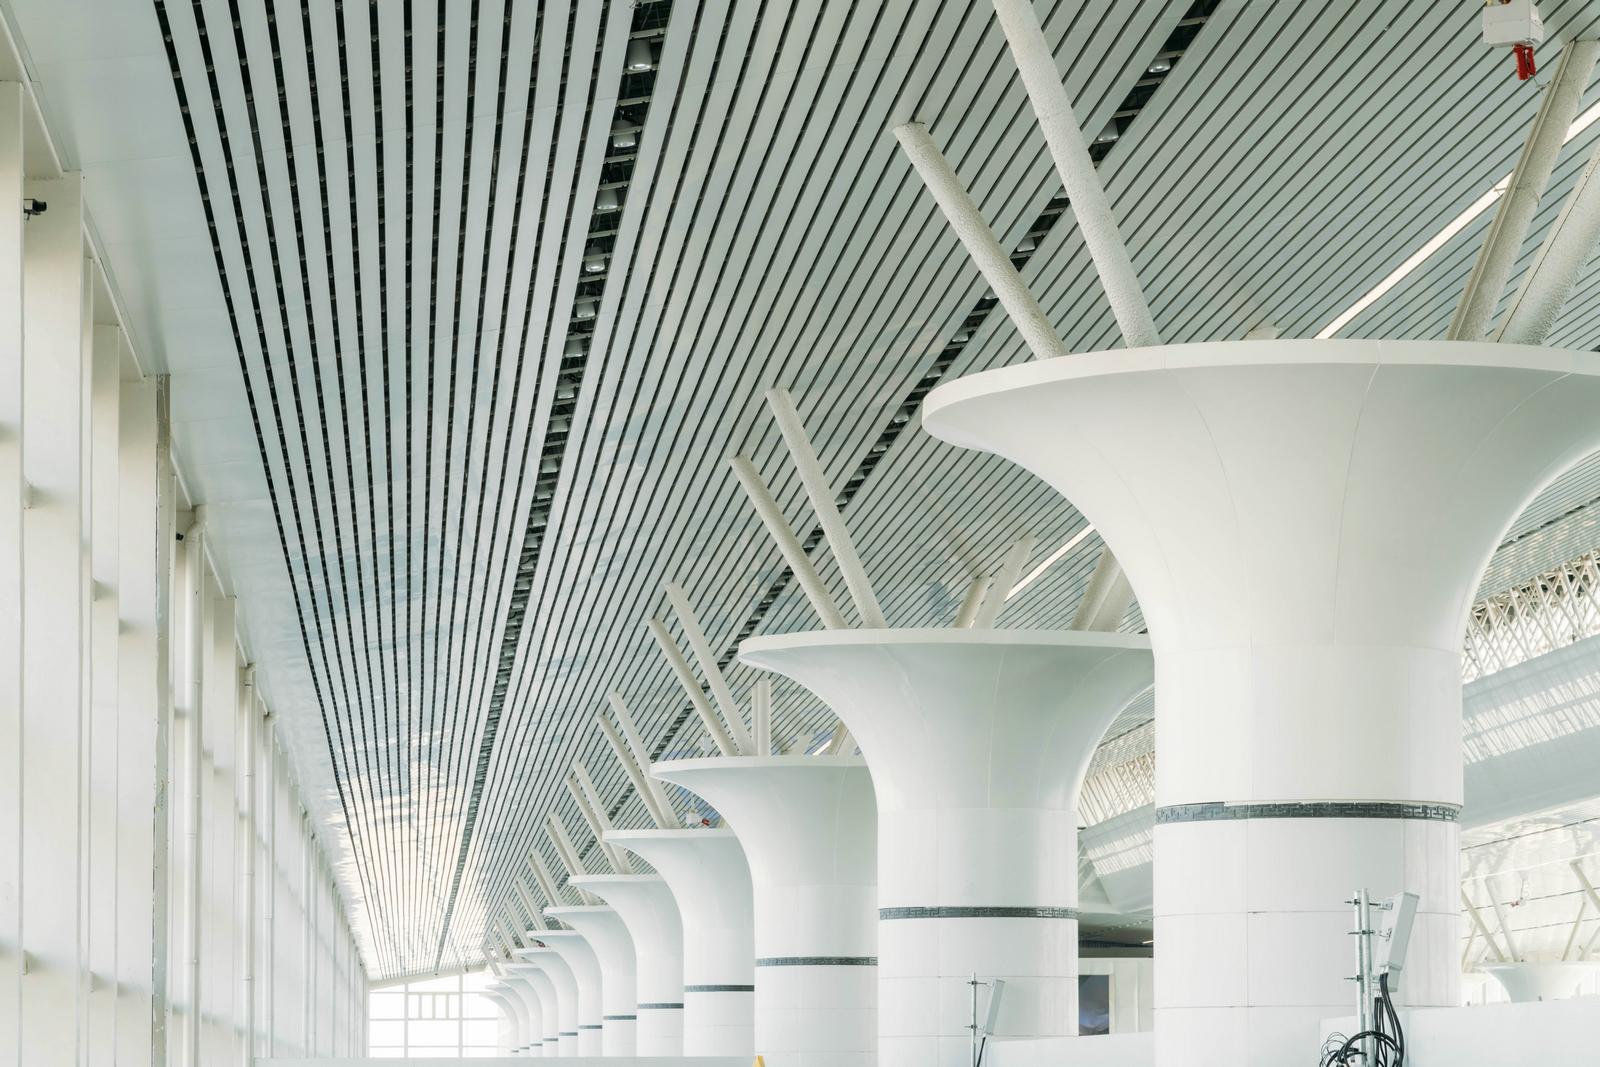 Roof design of North Finger Corridor of Jinan Yaoqiang International Airport(图14)